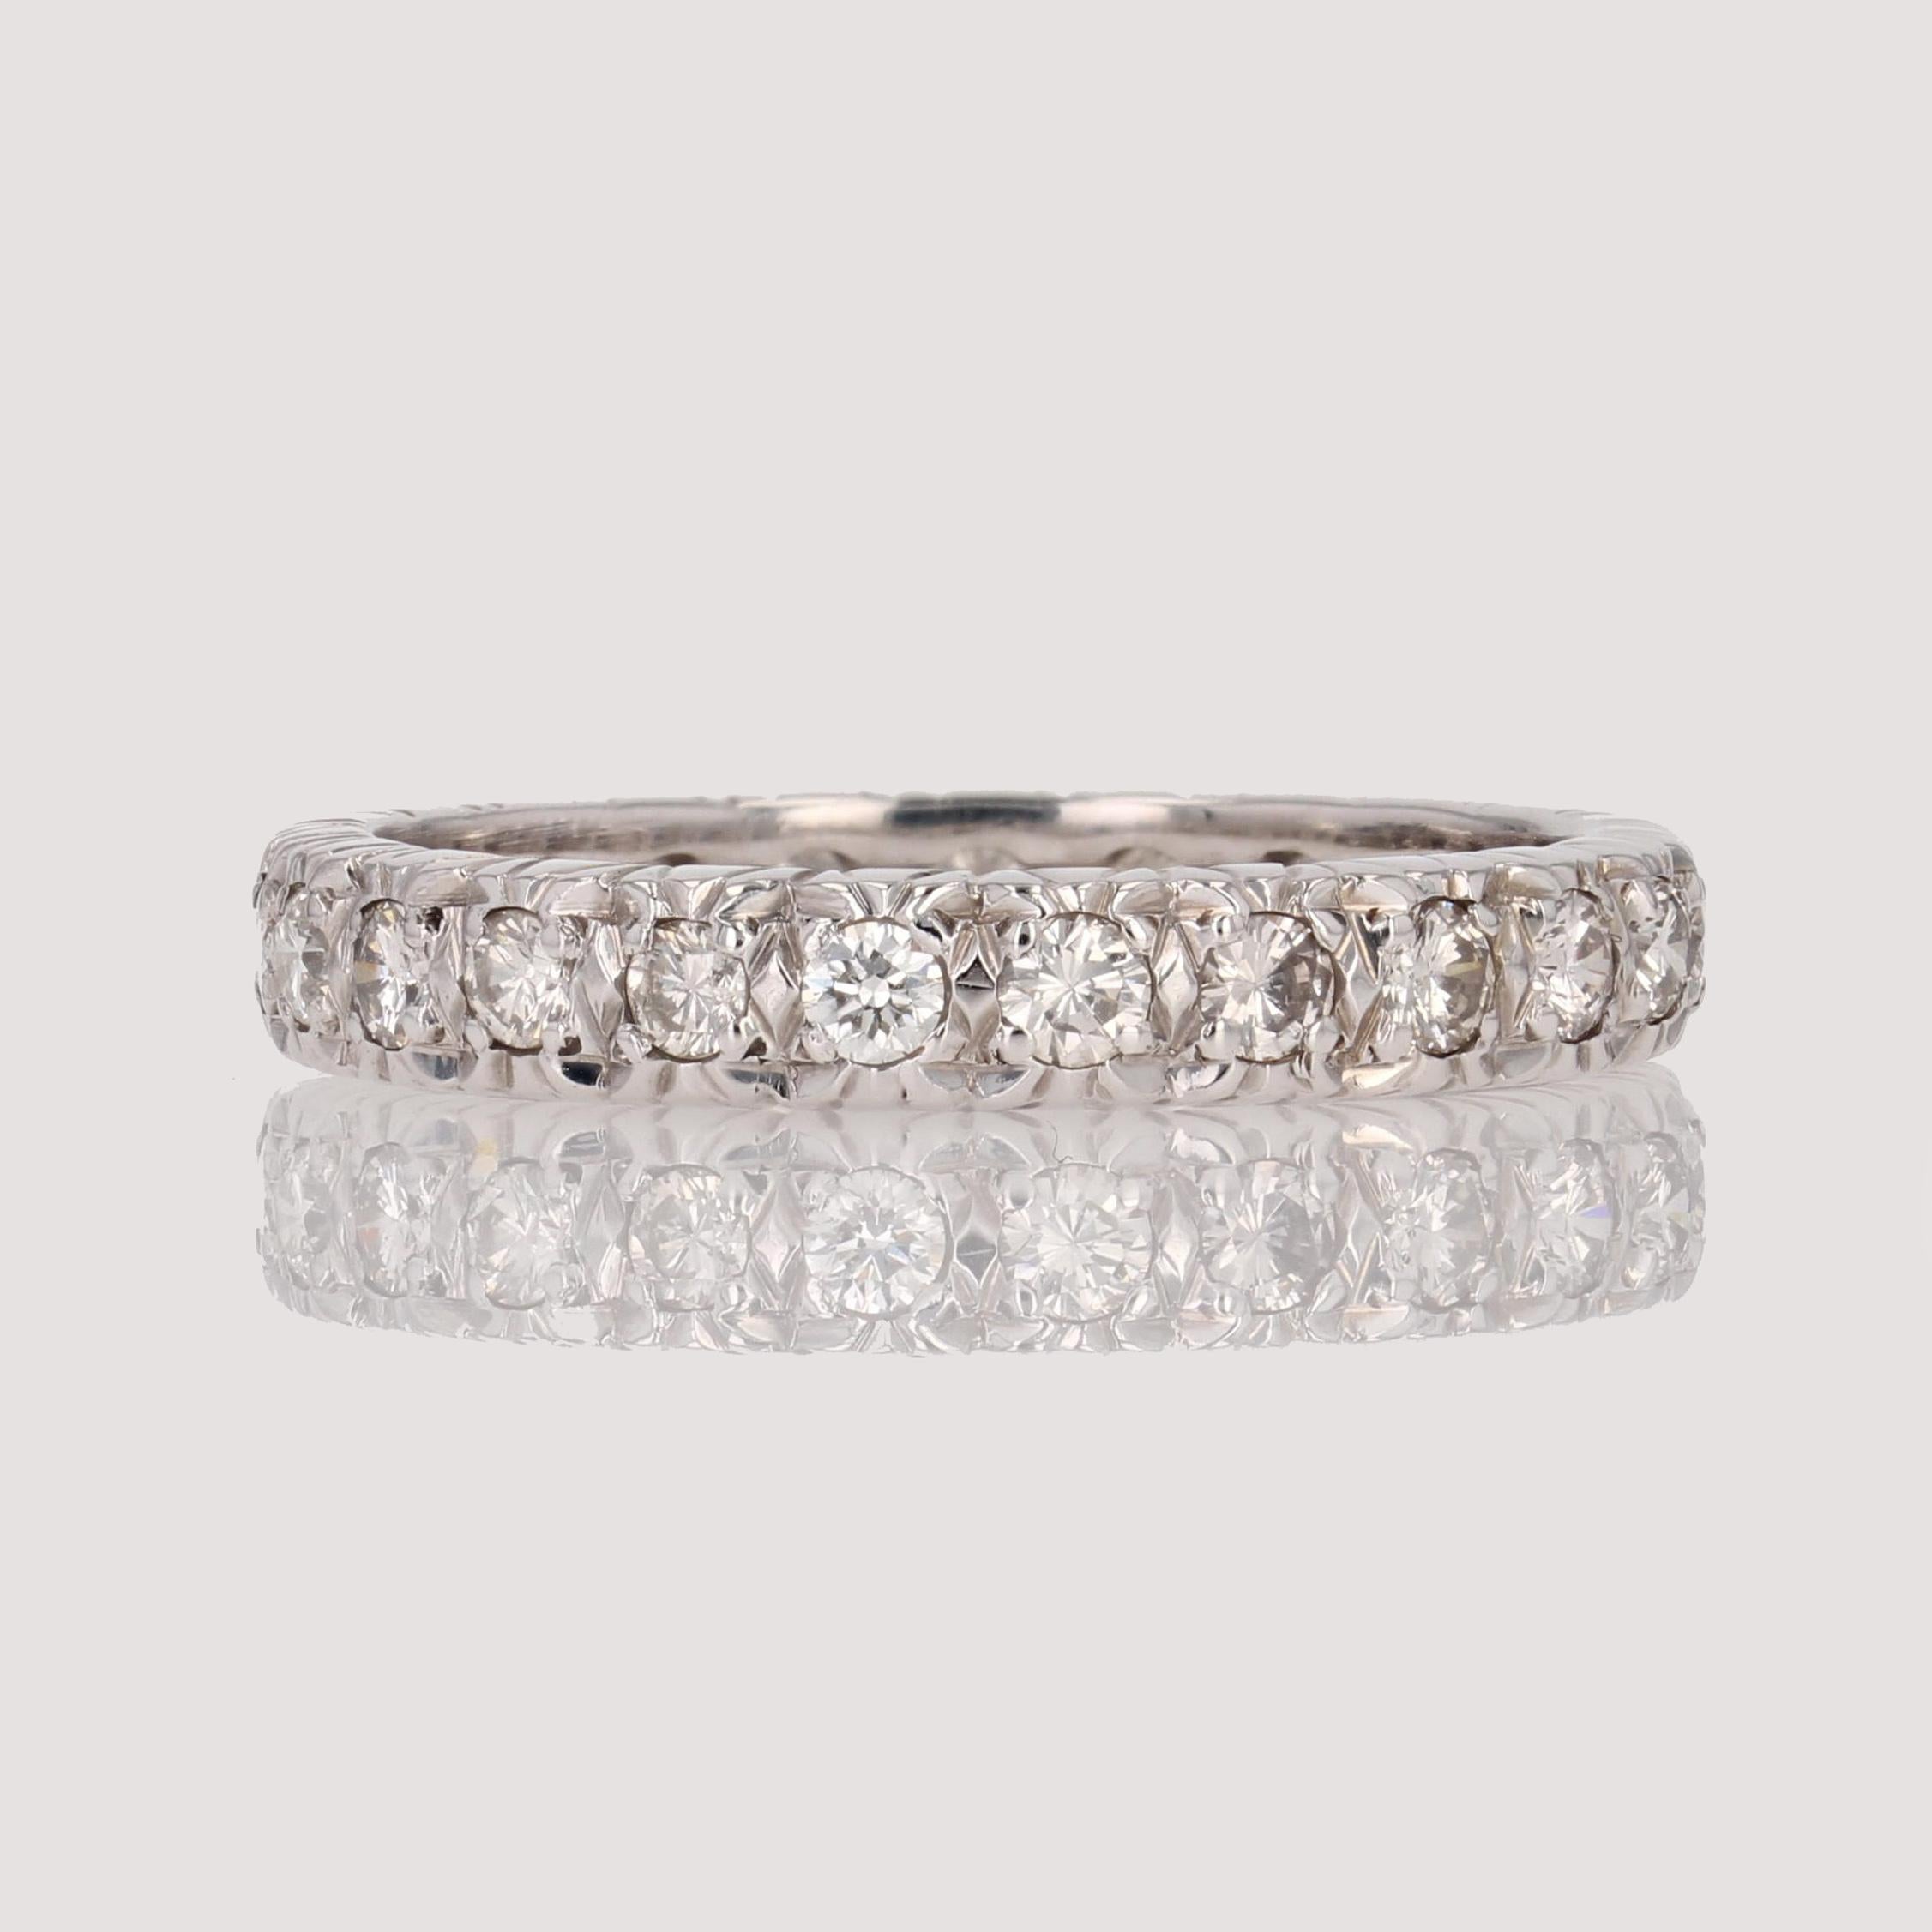 French 1970s 18 Karat White Gold Diamonds Wedding Ring For Sale 6